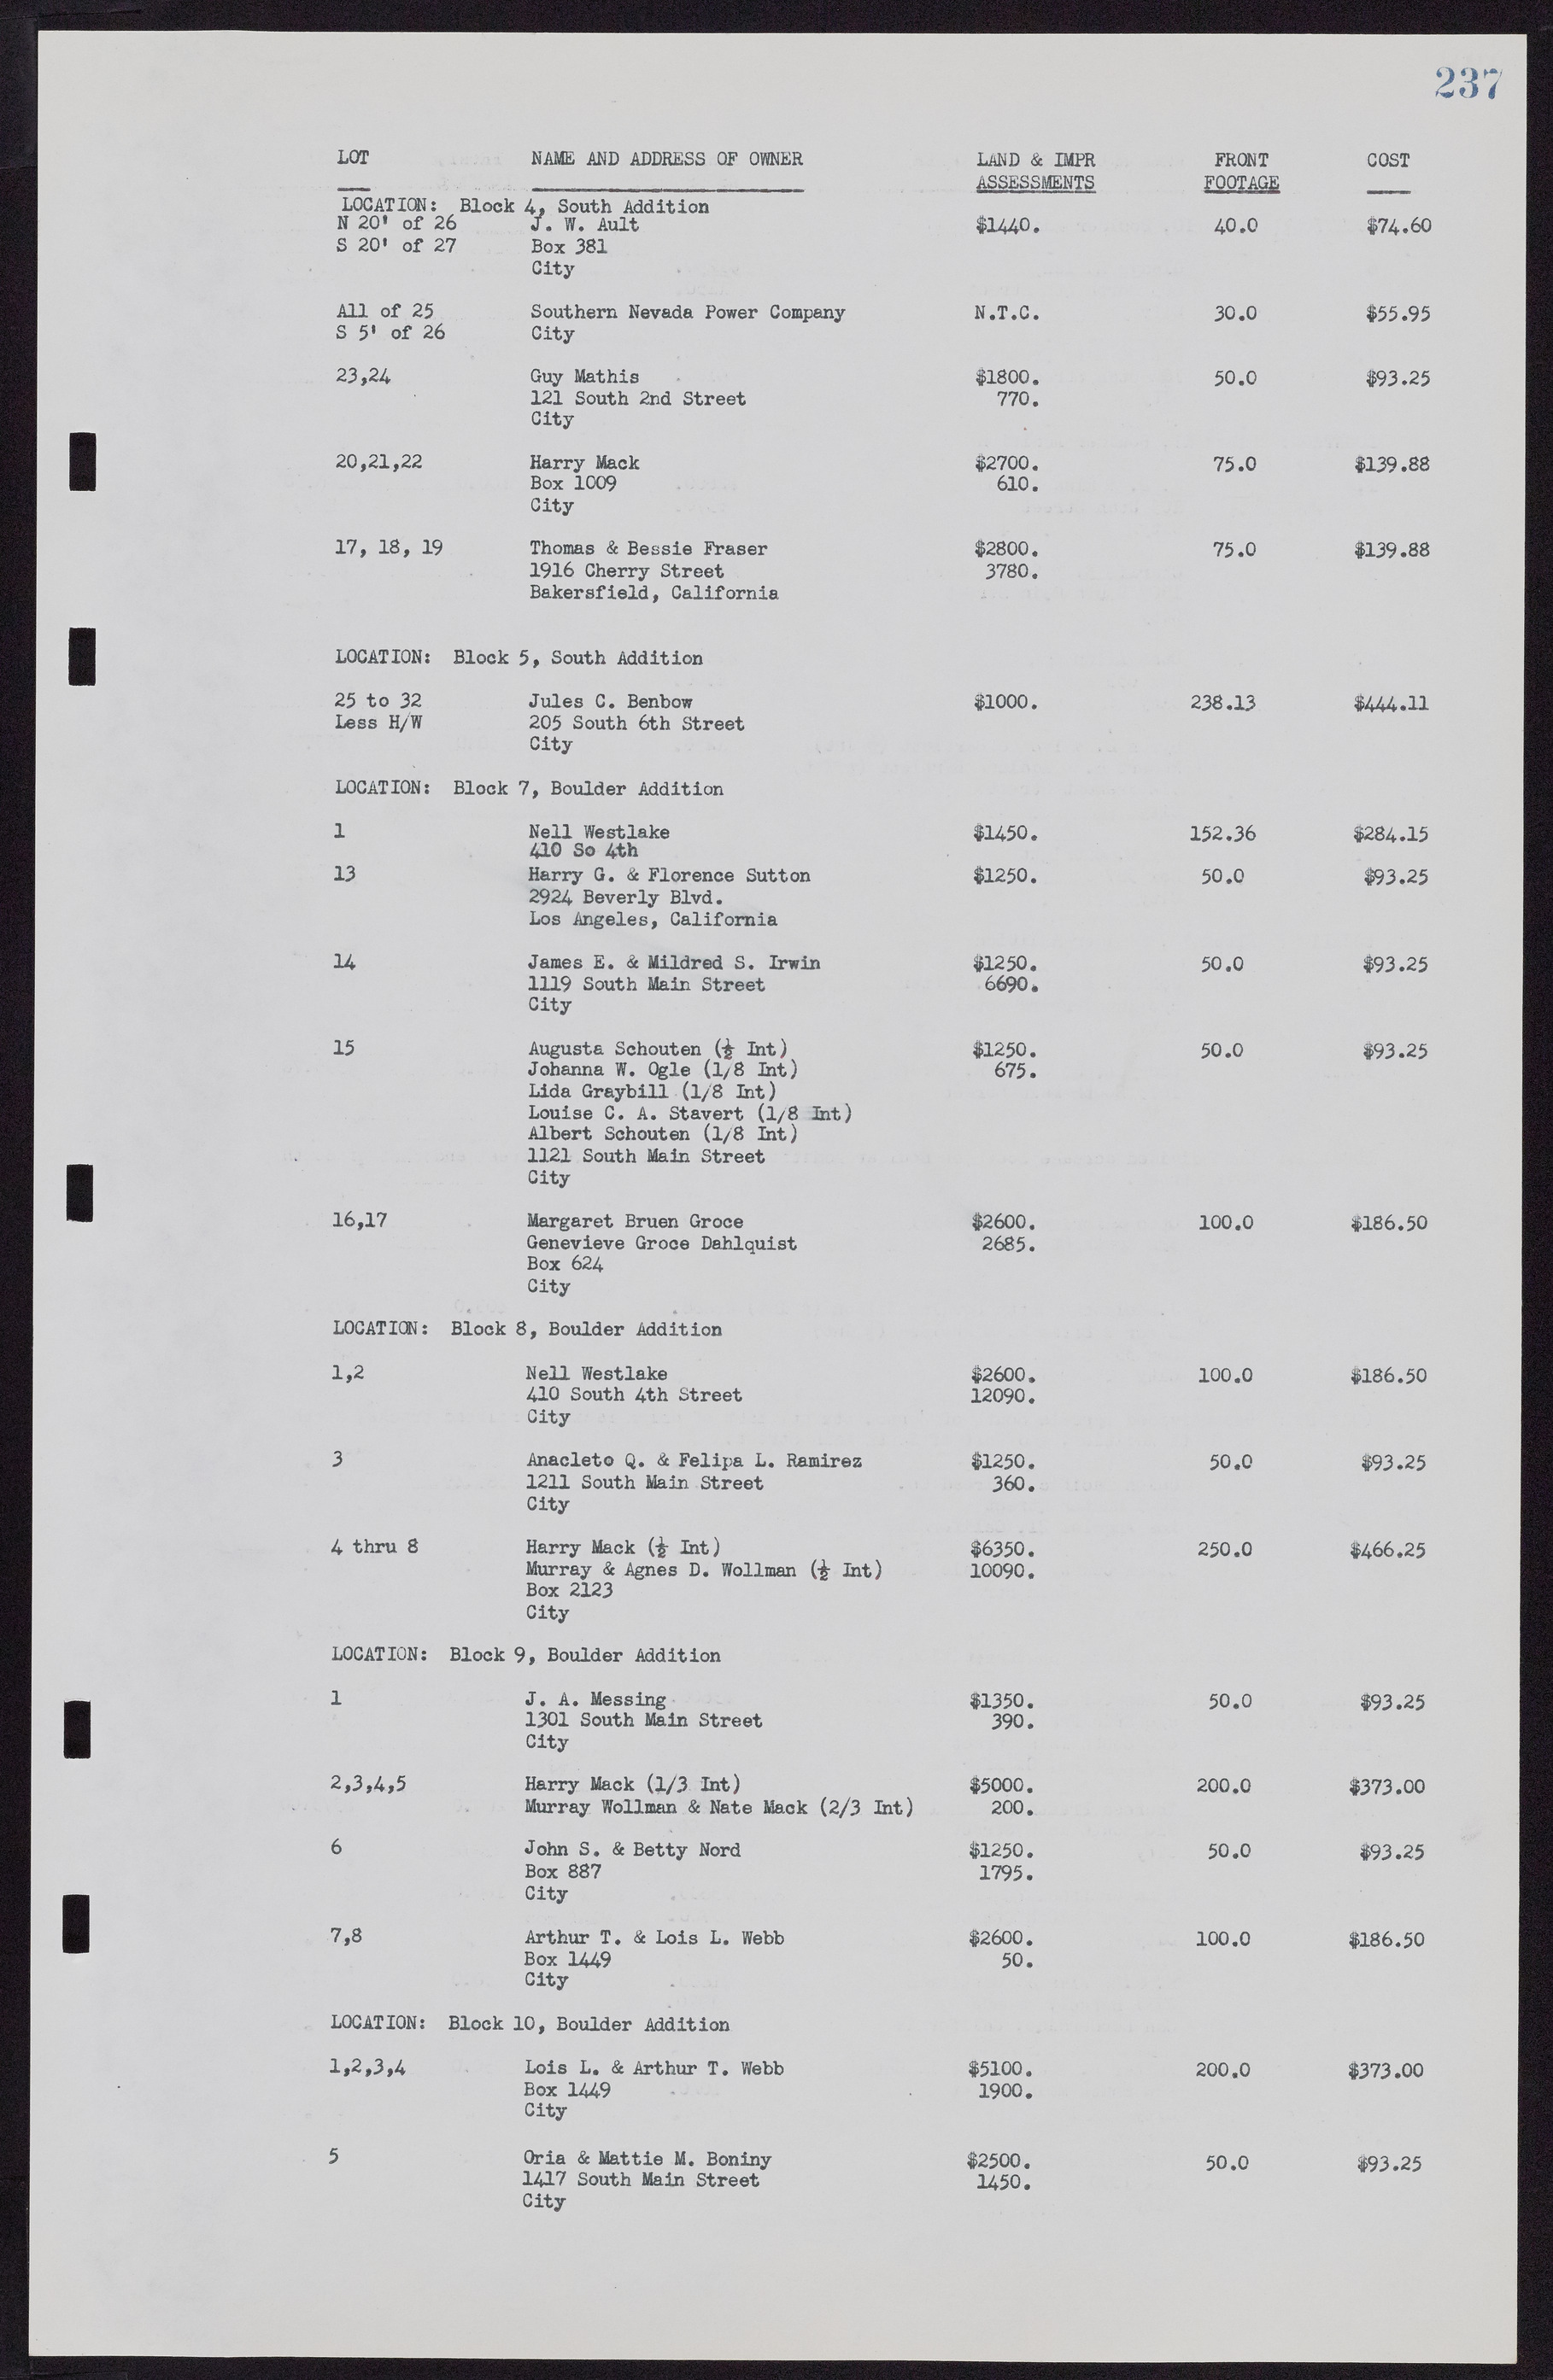 Las Vegas City Commission Minutes, November 7, 1949 to May 21, 1952, lvc000007-247